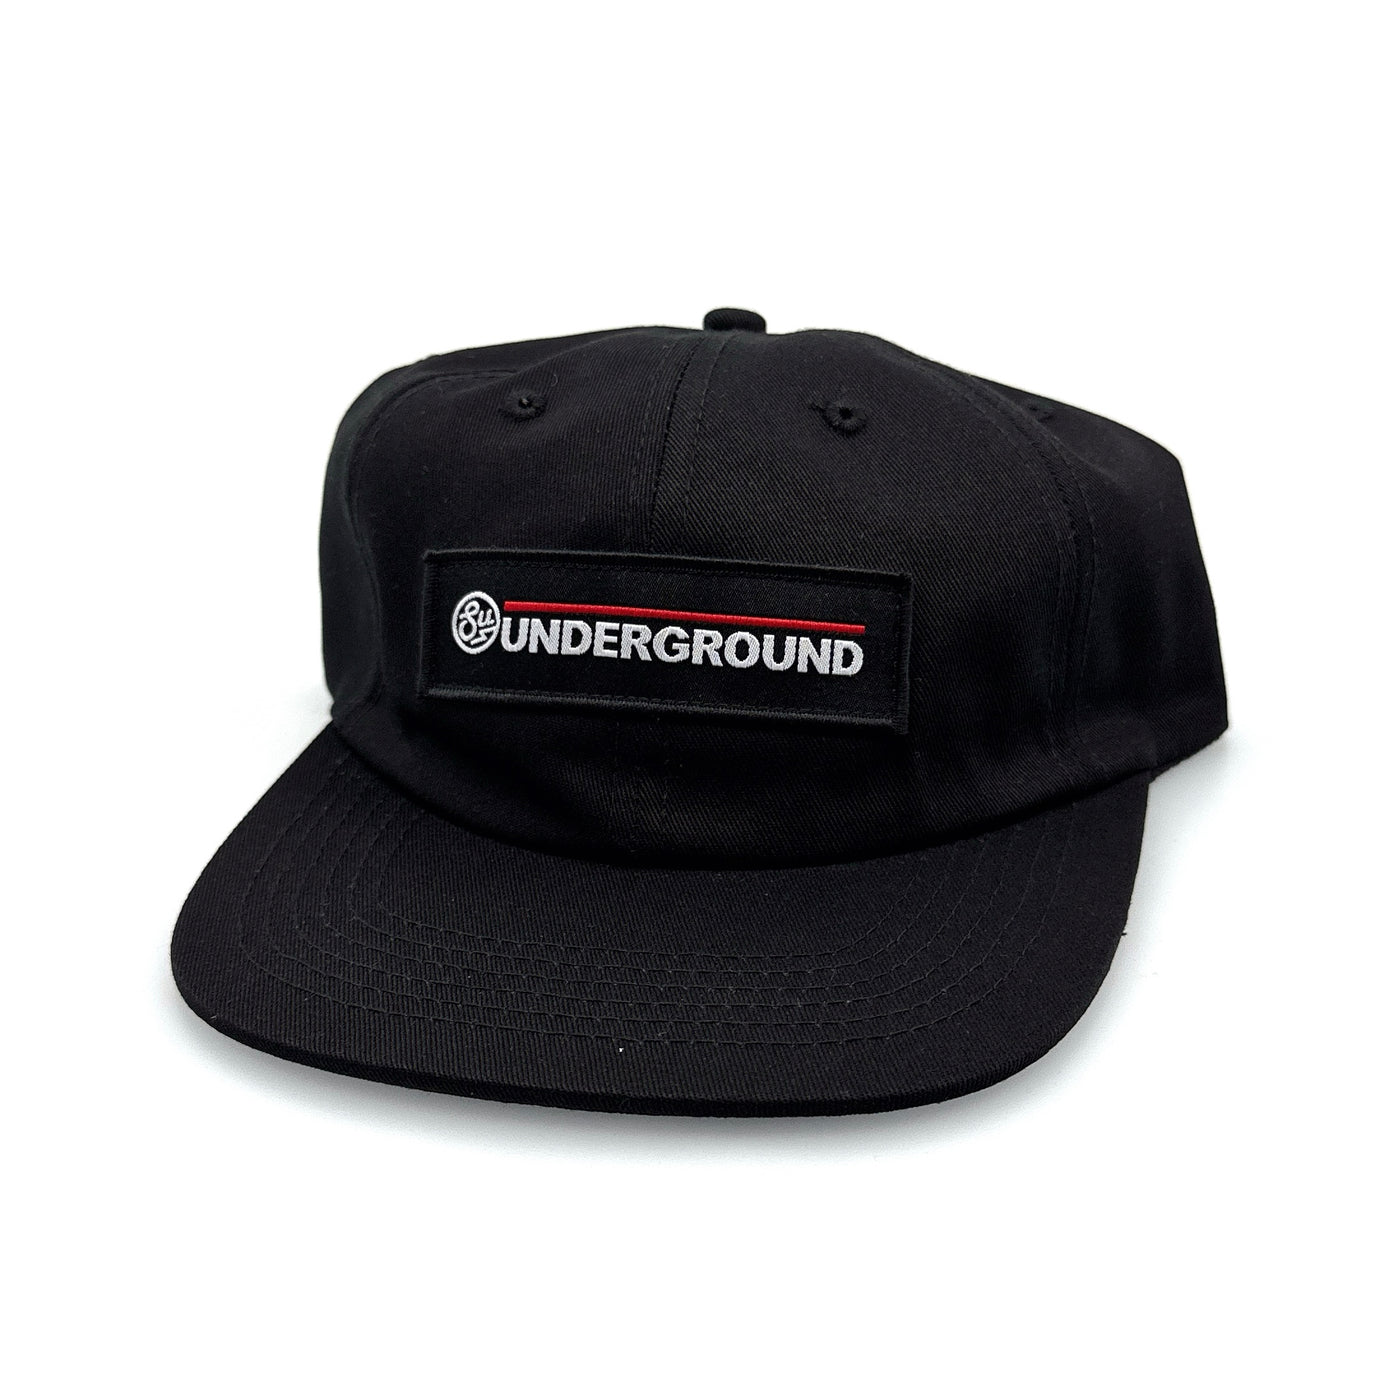 Swimbait Underground Wordmark Patch Unstructured Snapback Hat - Black